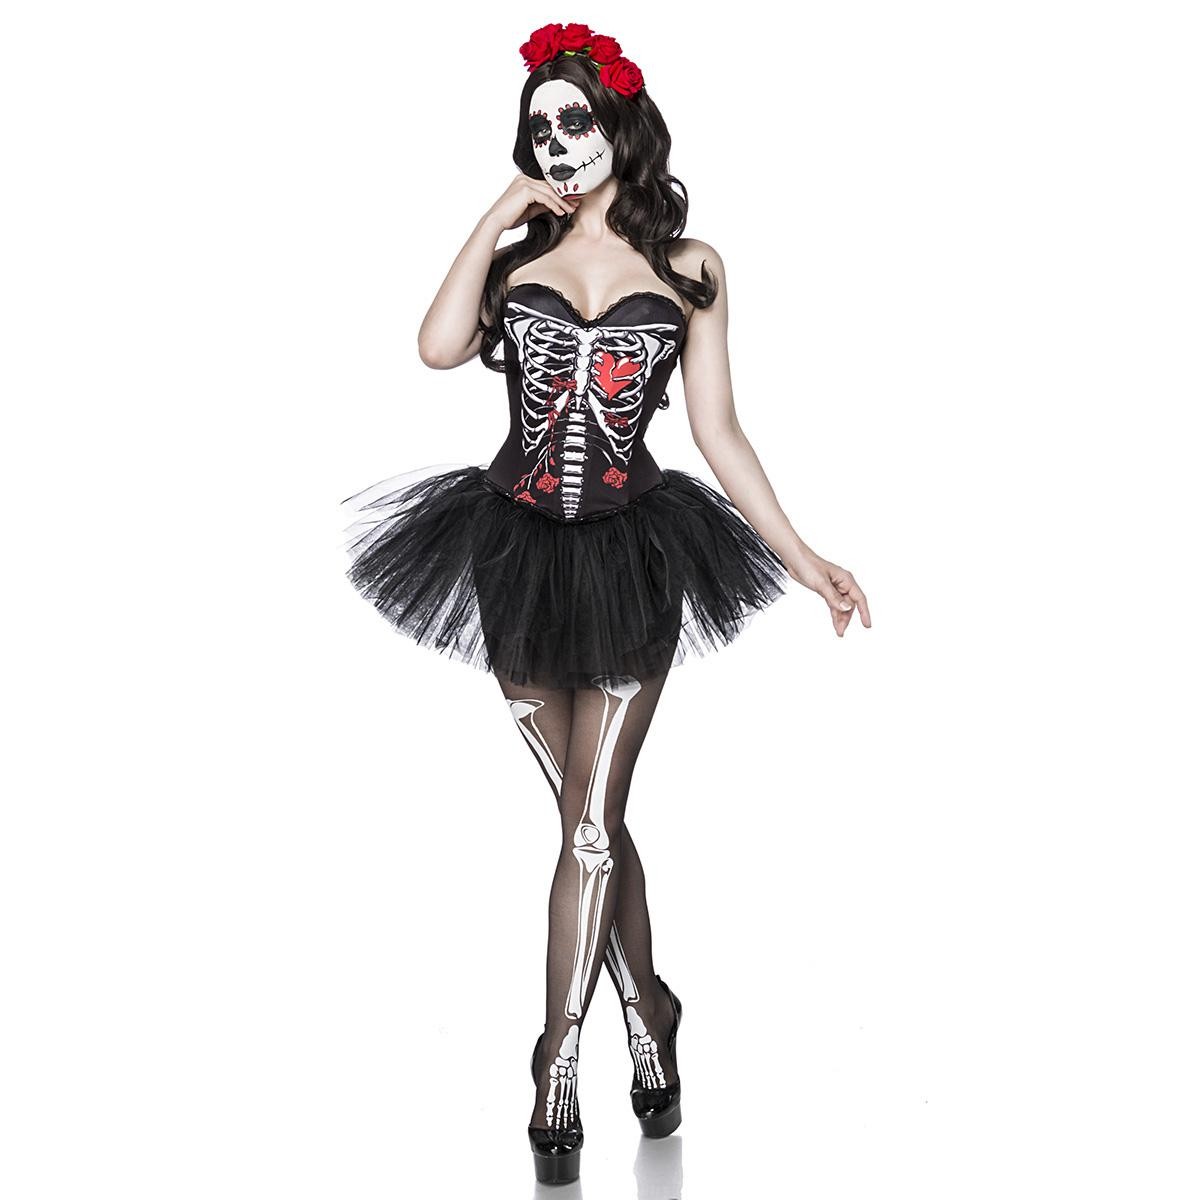  Mask  Paradise  -  Skull  Senorita  Kostümset  -  schwarz/weiß/rot 